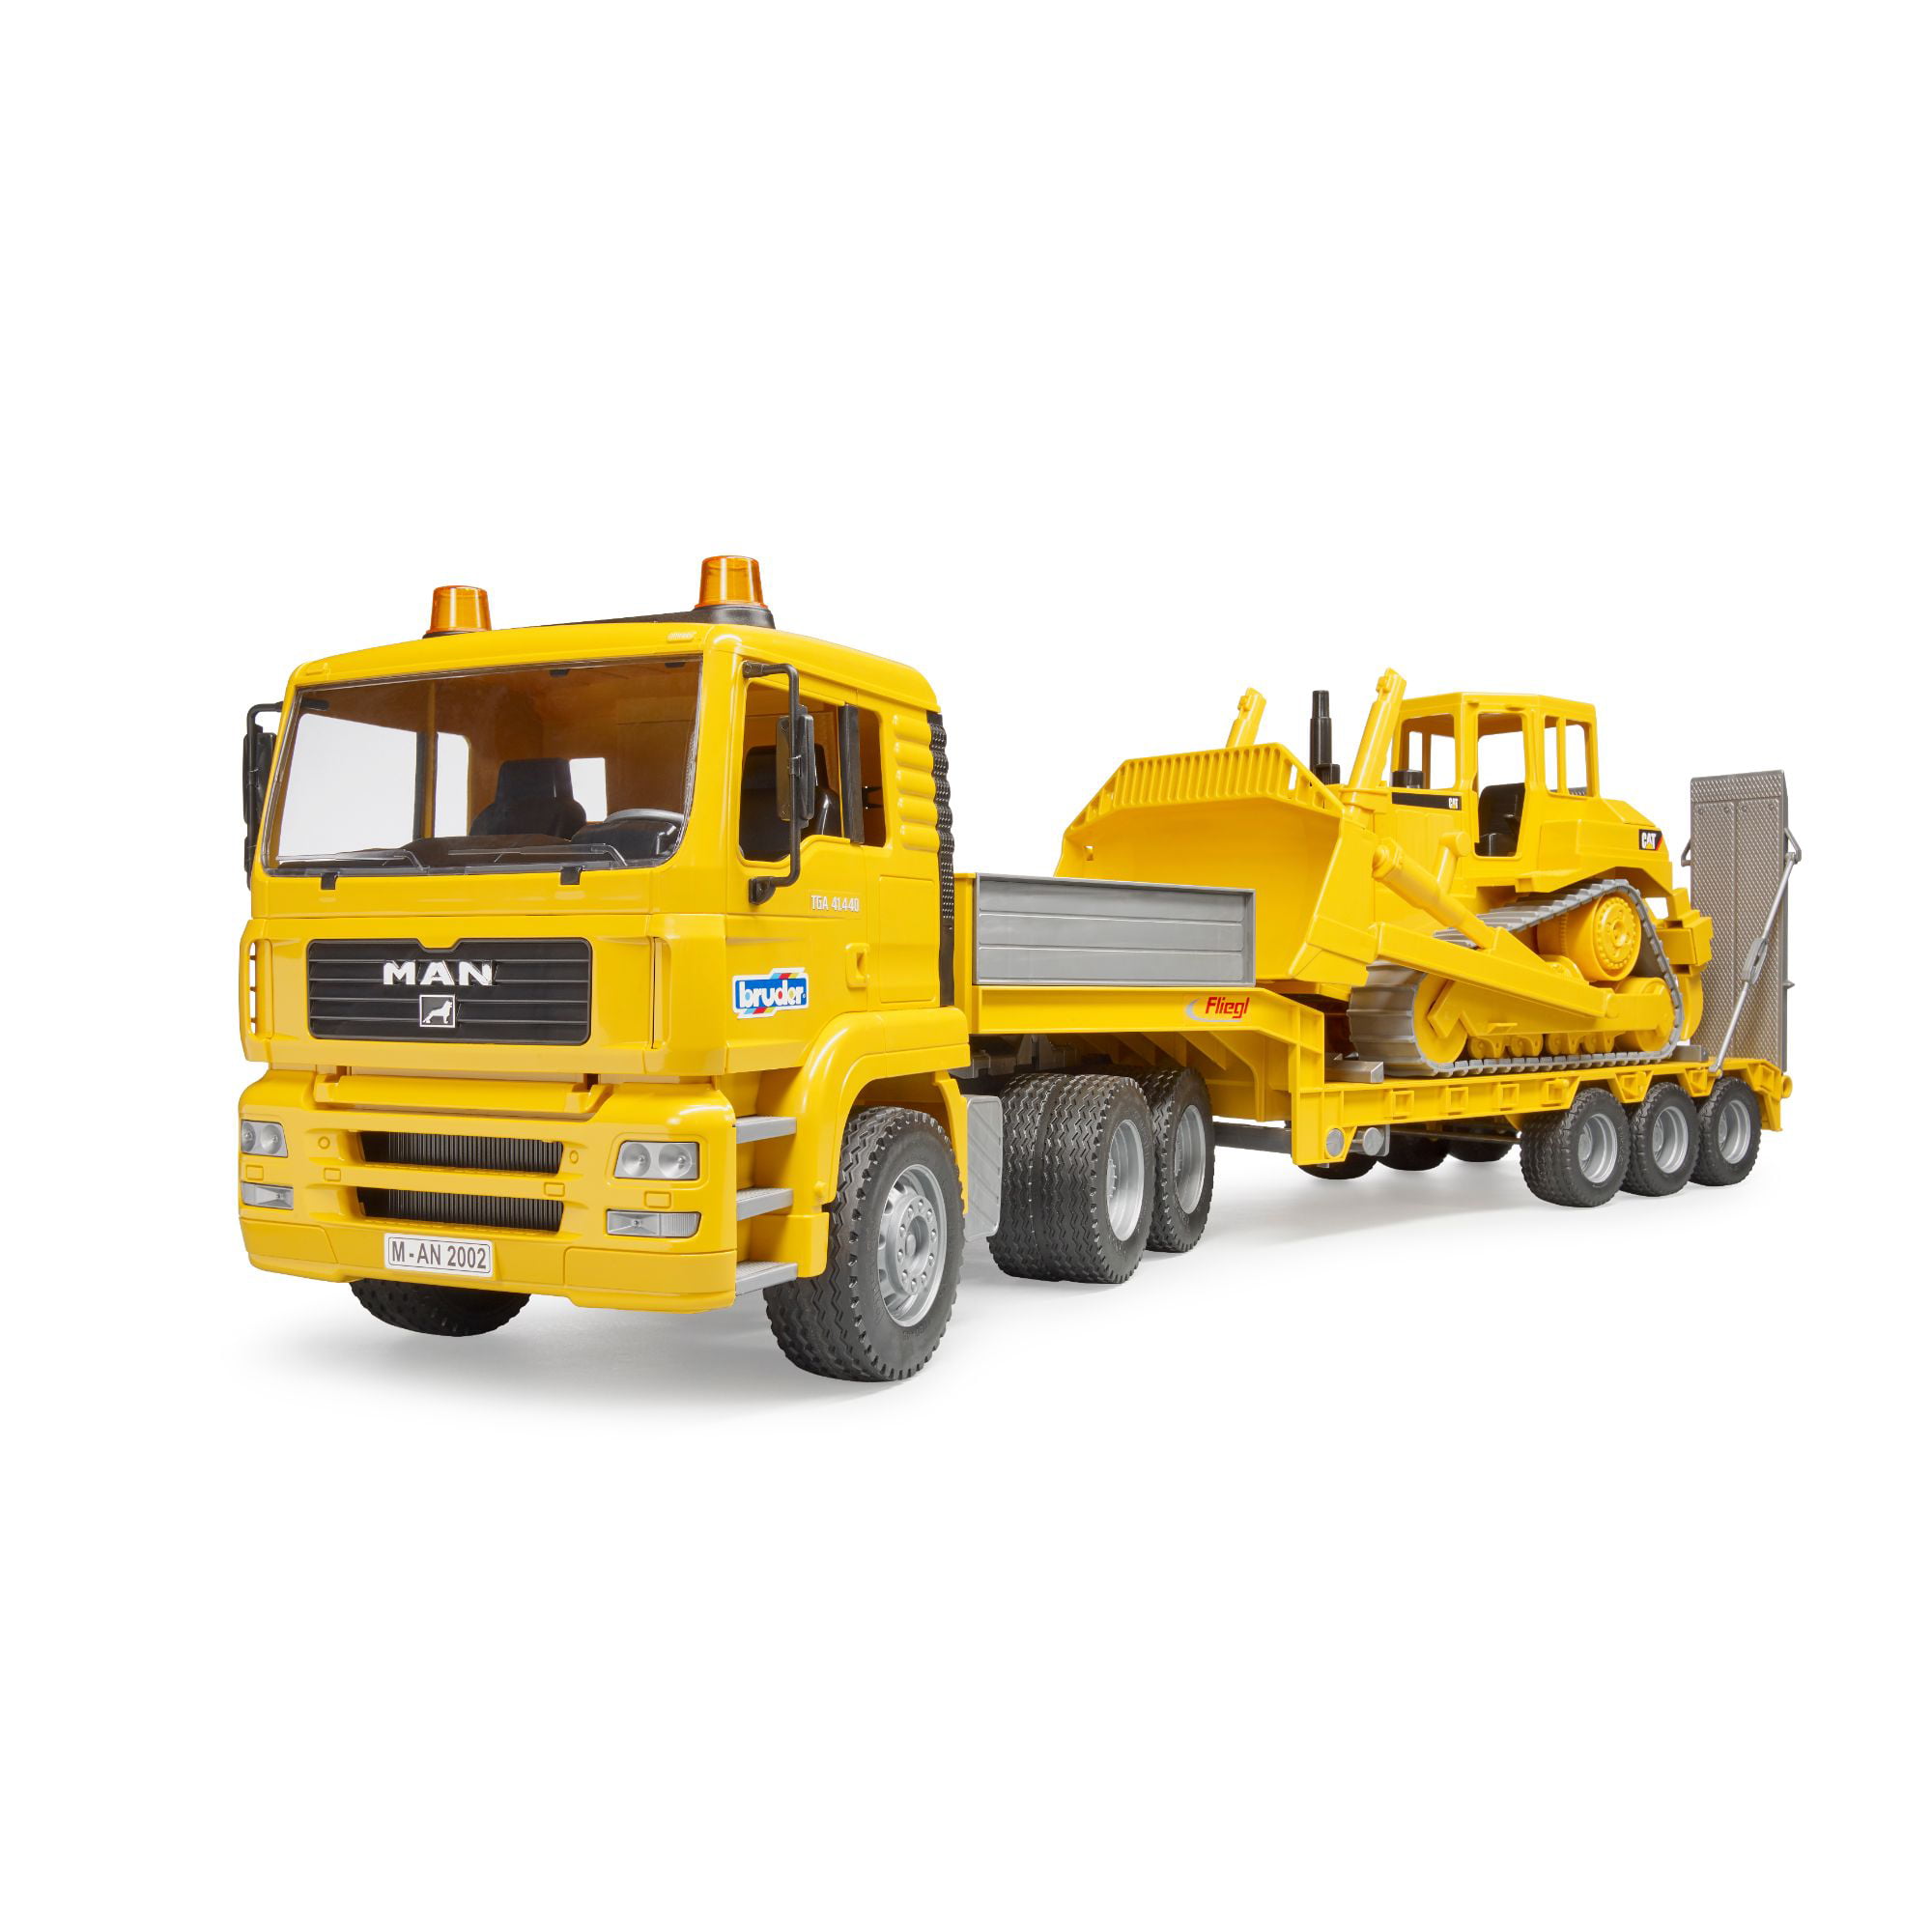 Bruder 1/16 Man Tga Loader Truck with Cat Bulldozer Vehicles-Toys 02778 